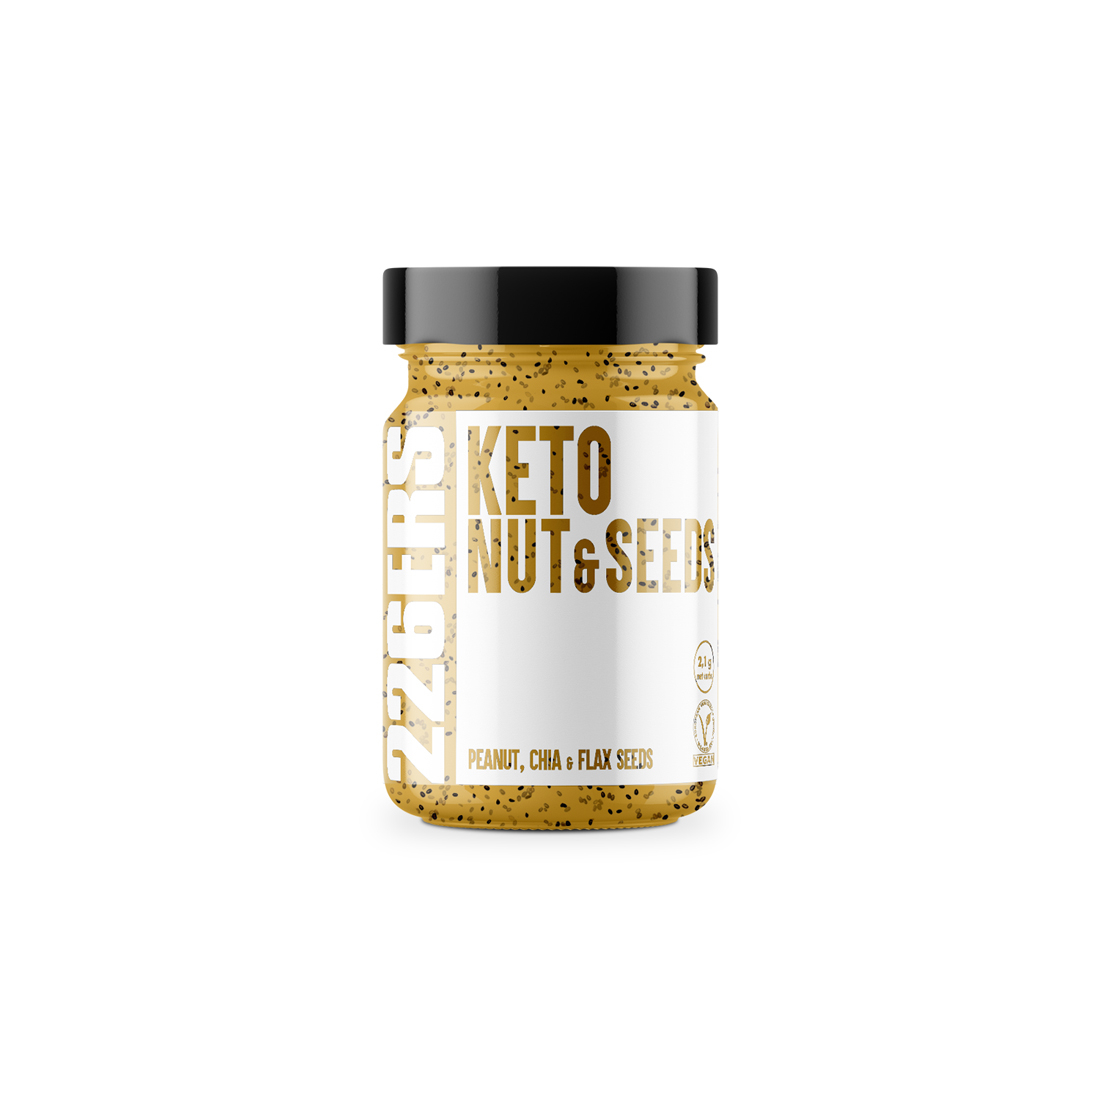 KETO BUTTER NUT & SEEDS 350G